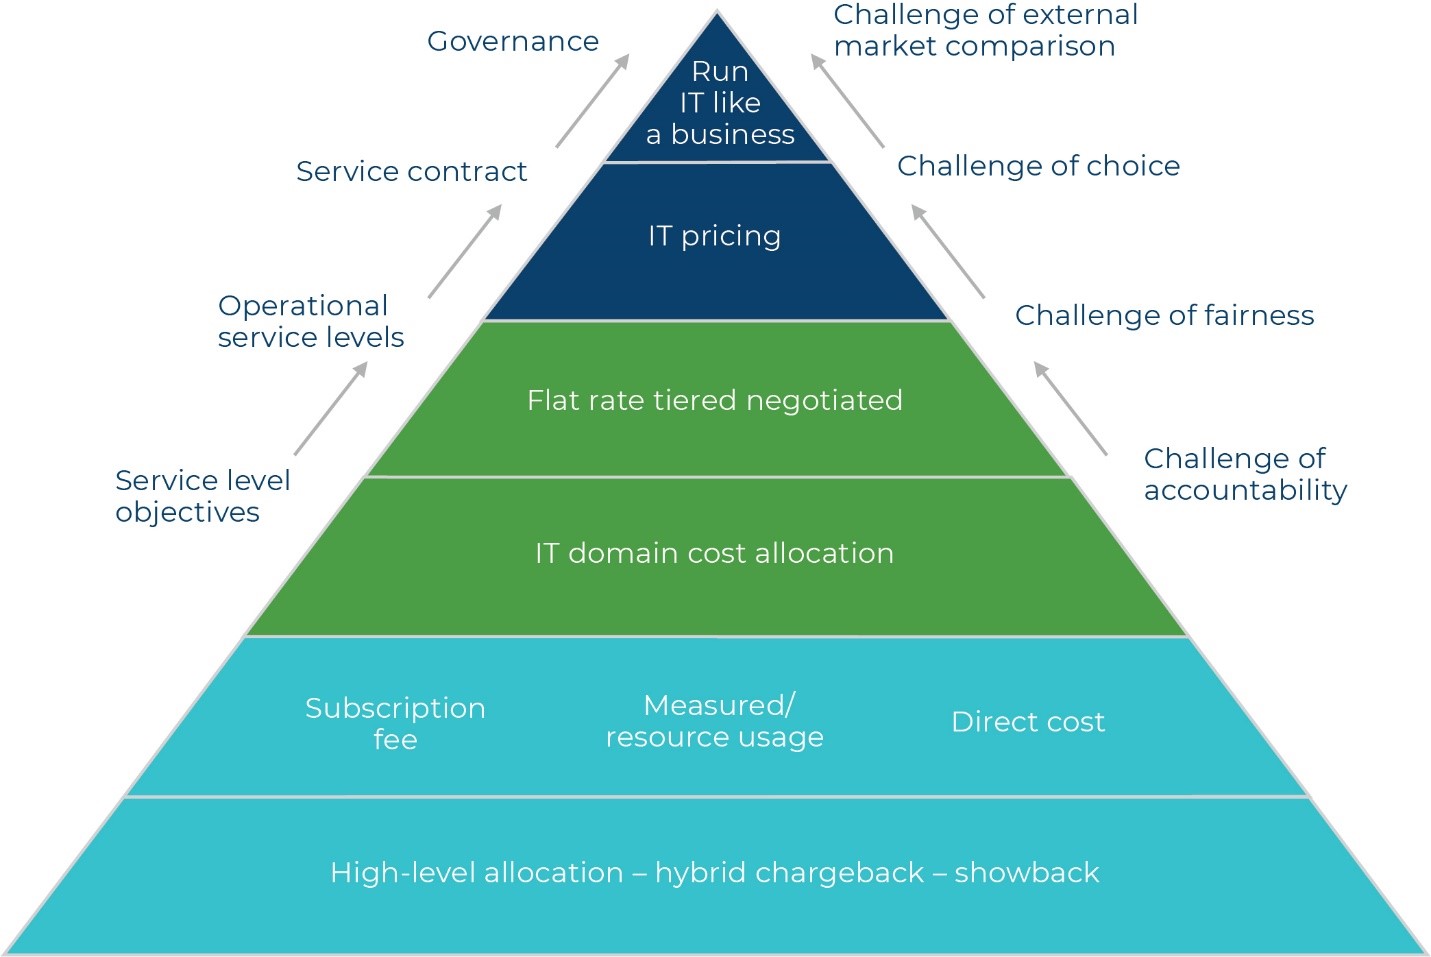 cost allocation methodology